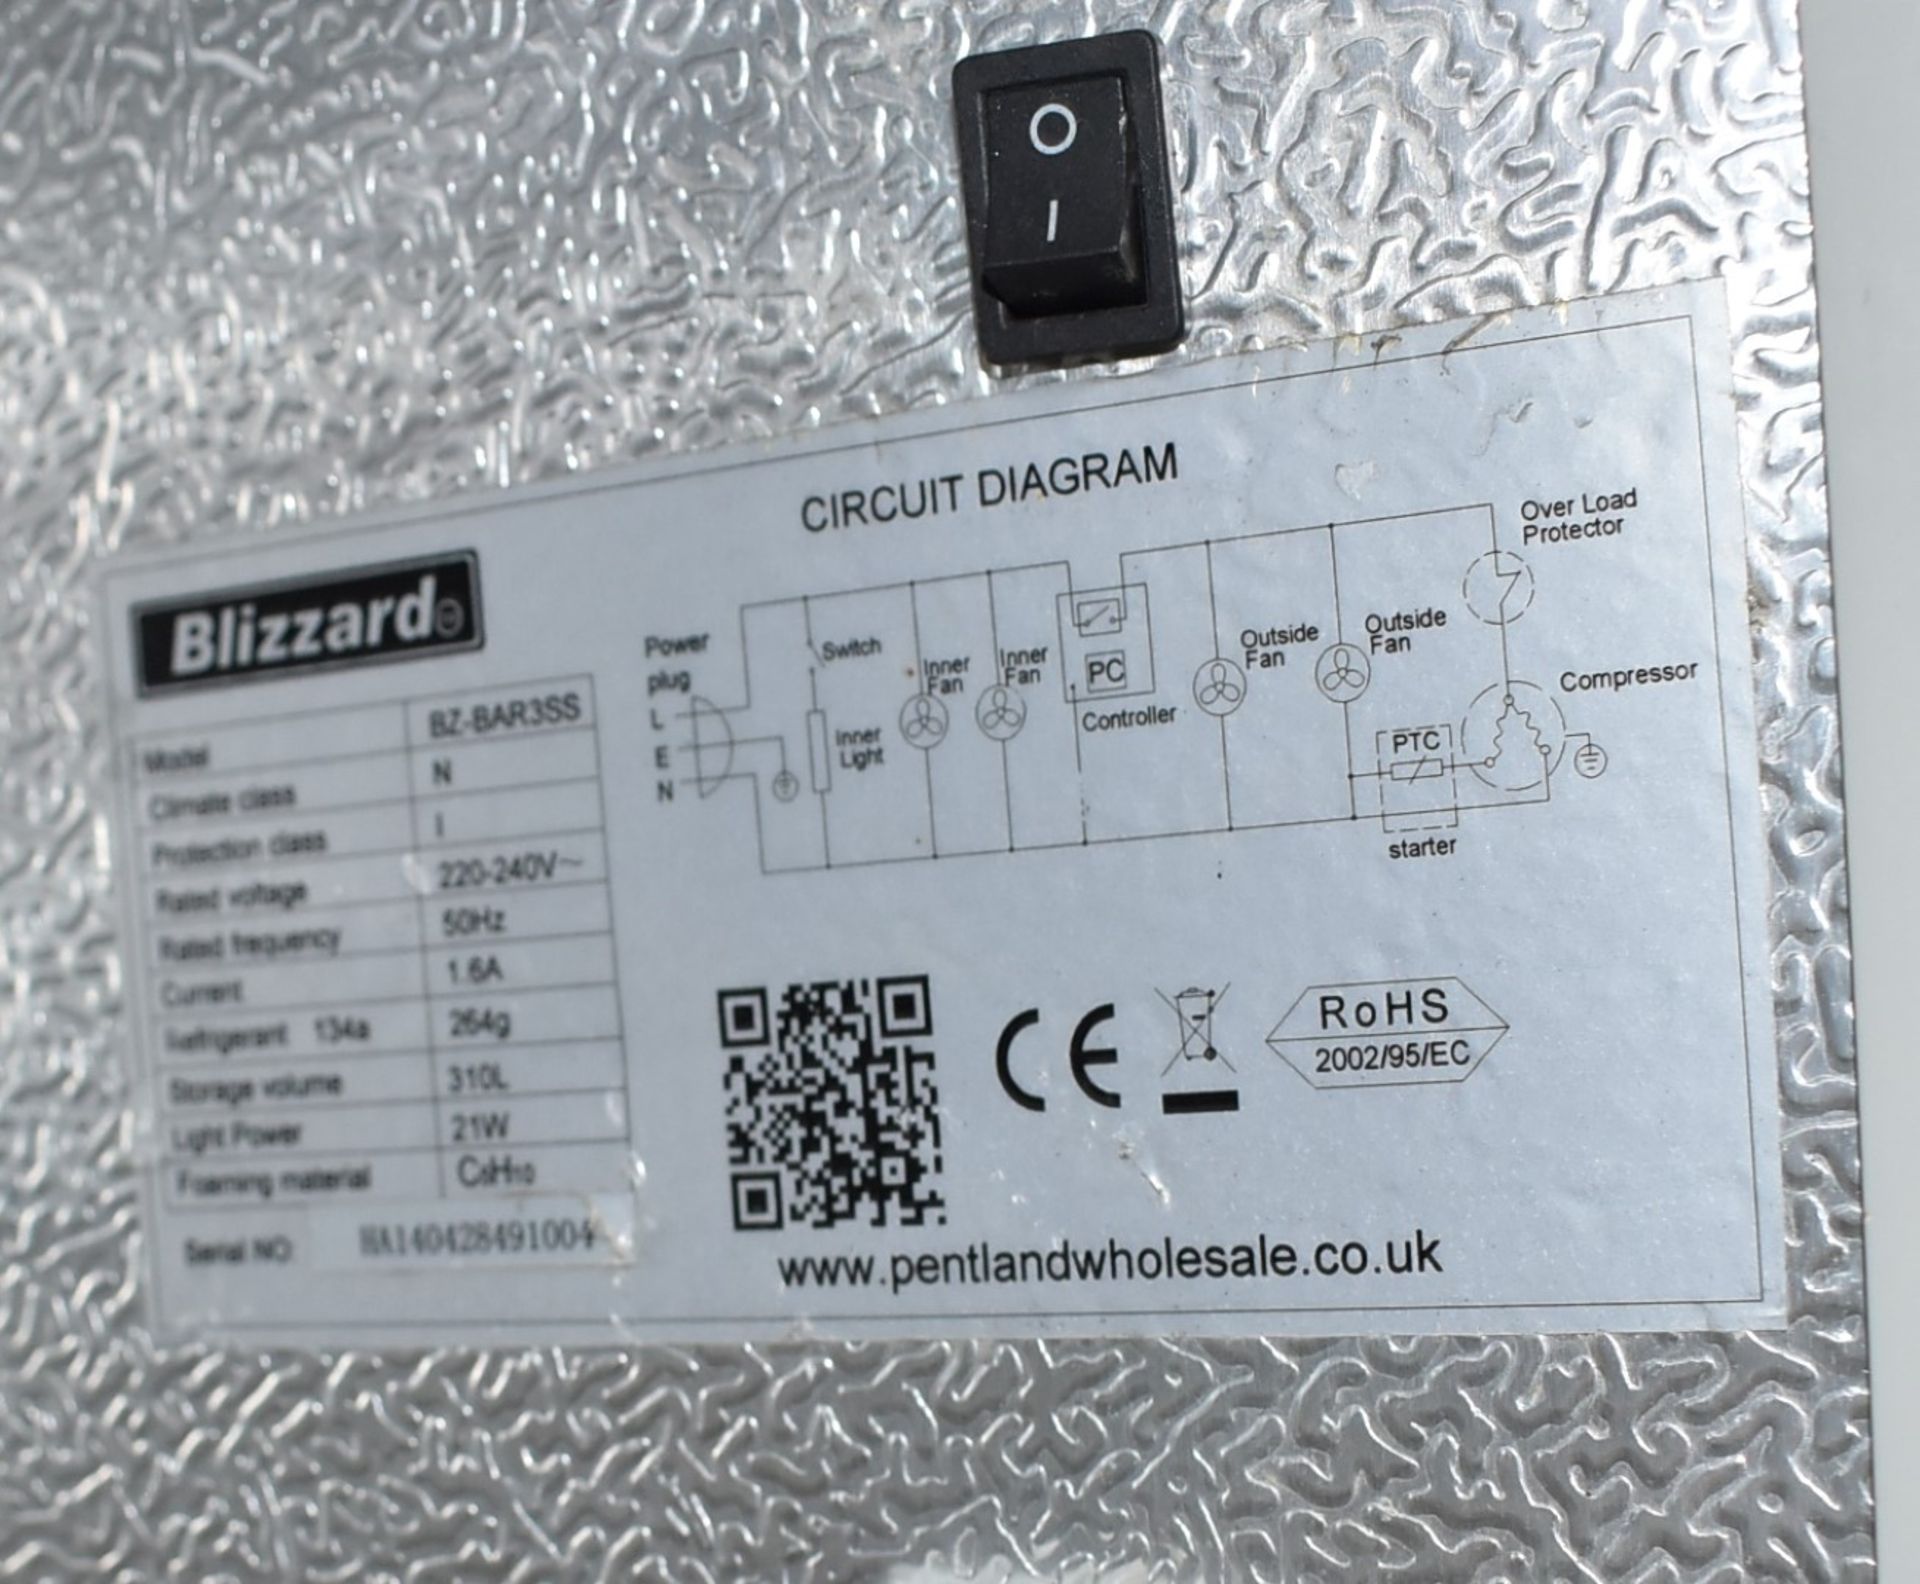 1 x Blizzard Triple Door Backbar Bottle Cooler - Stainless Steel Exterior - 293 Bottle Capacity - Image 7 of 8